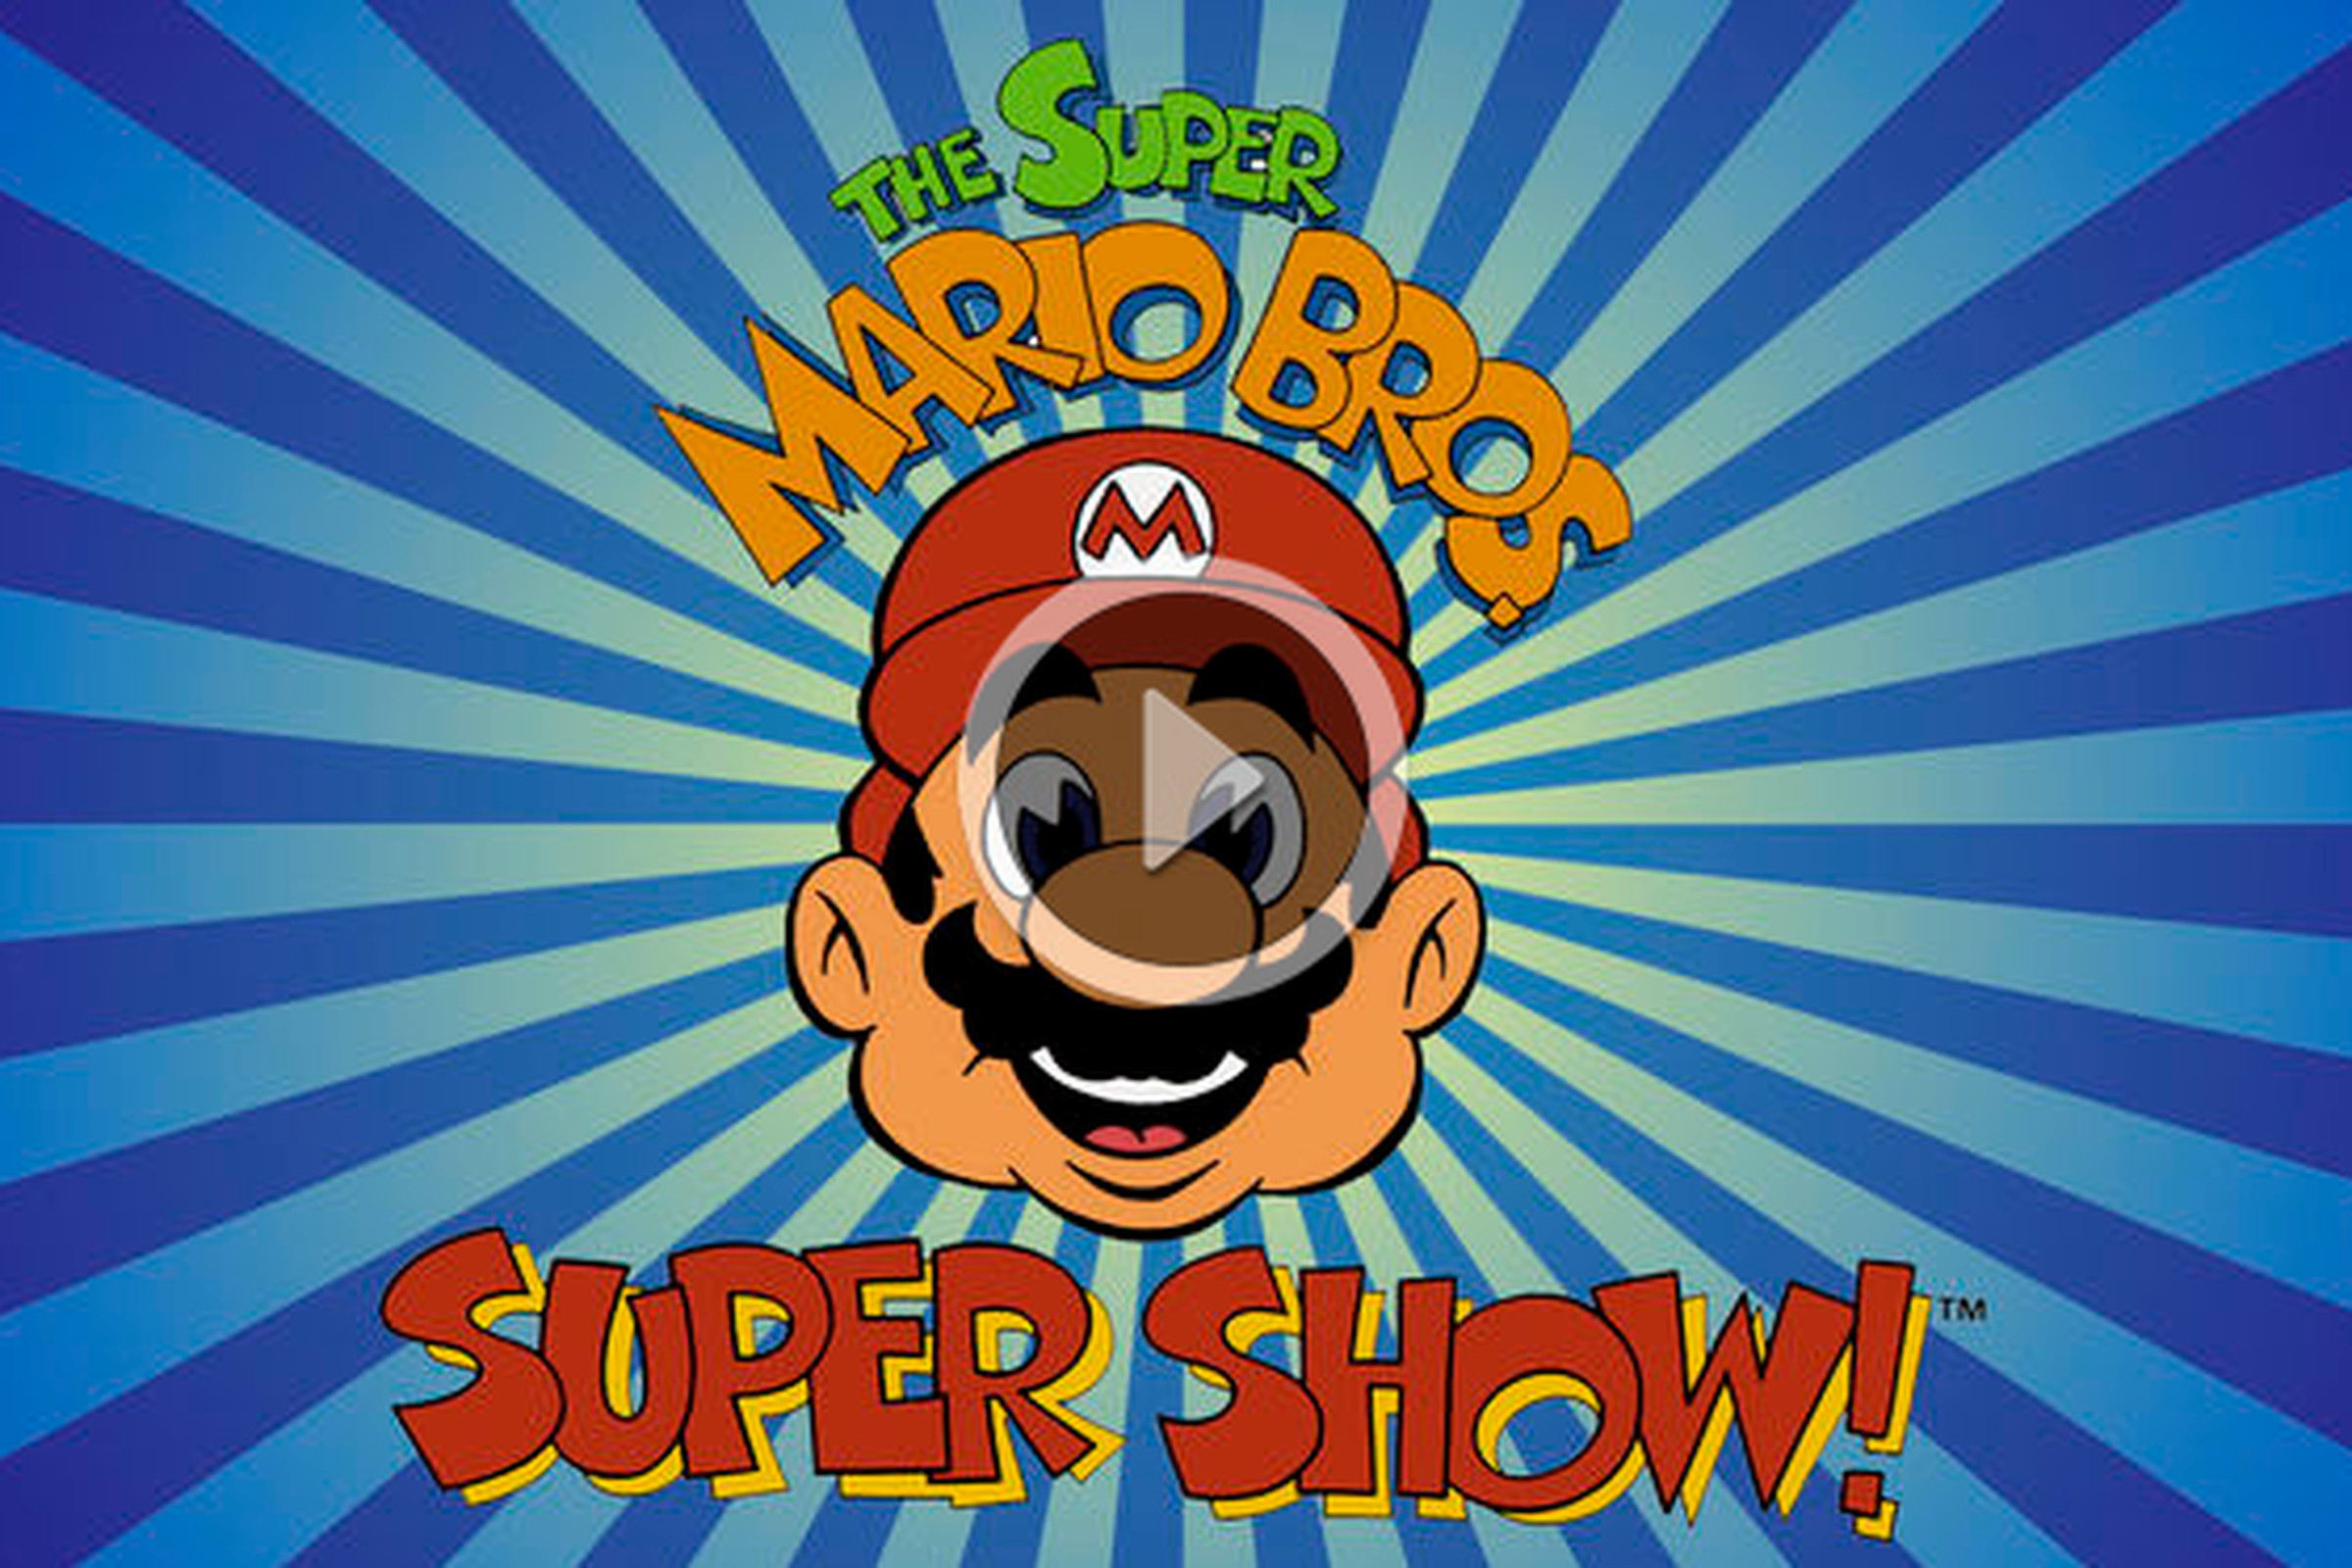 he Super Mario Bros. Super Show